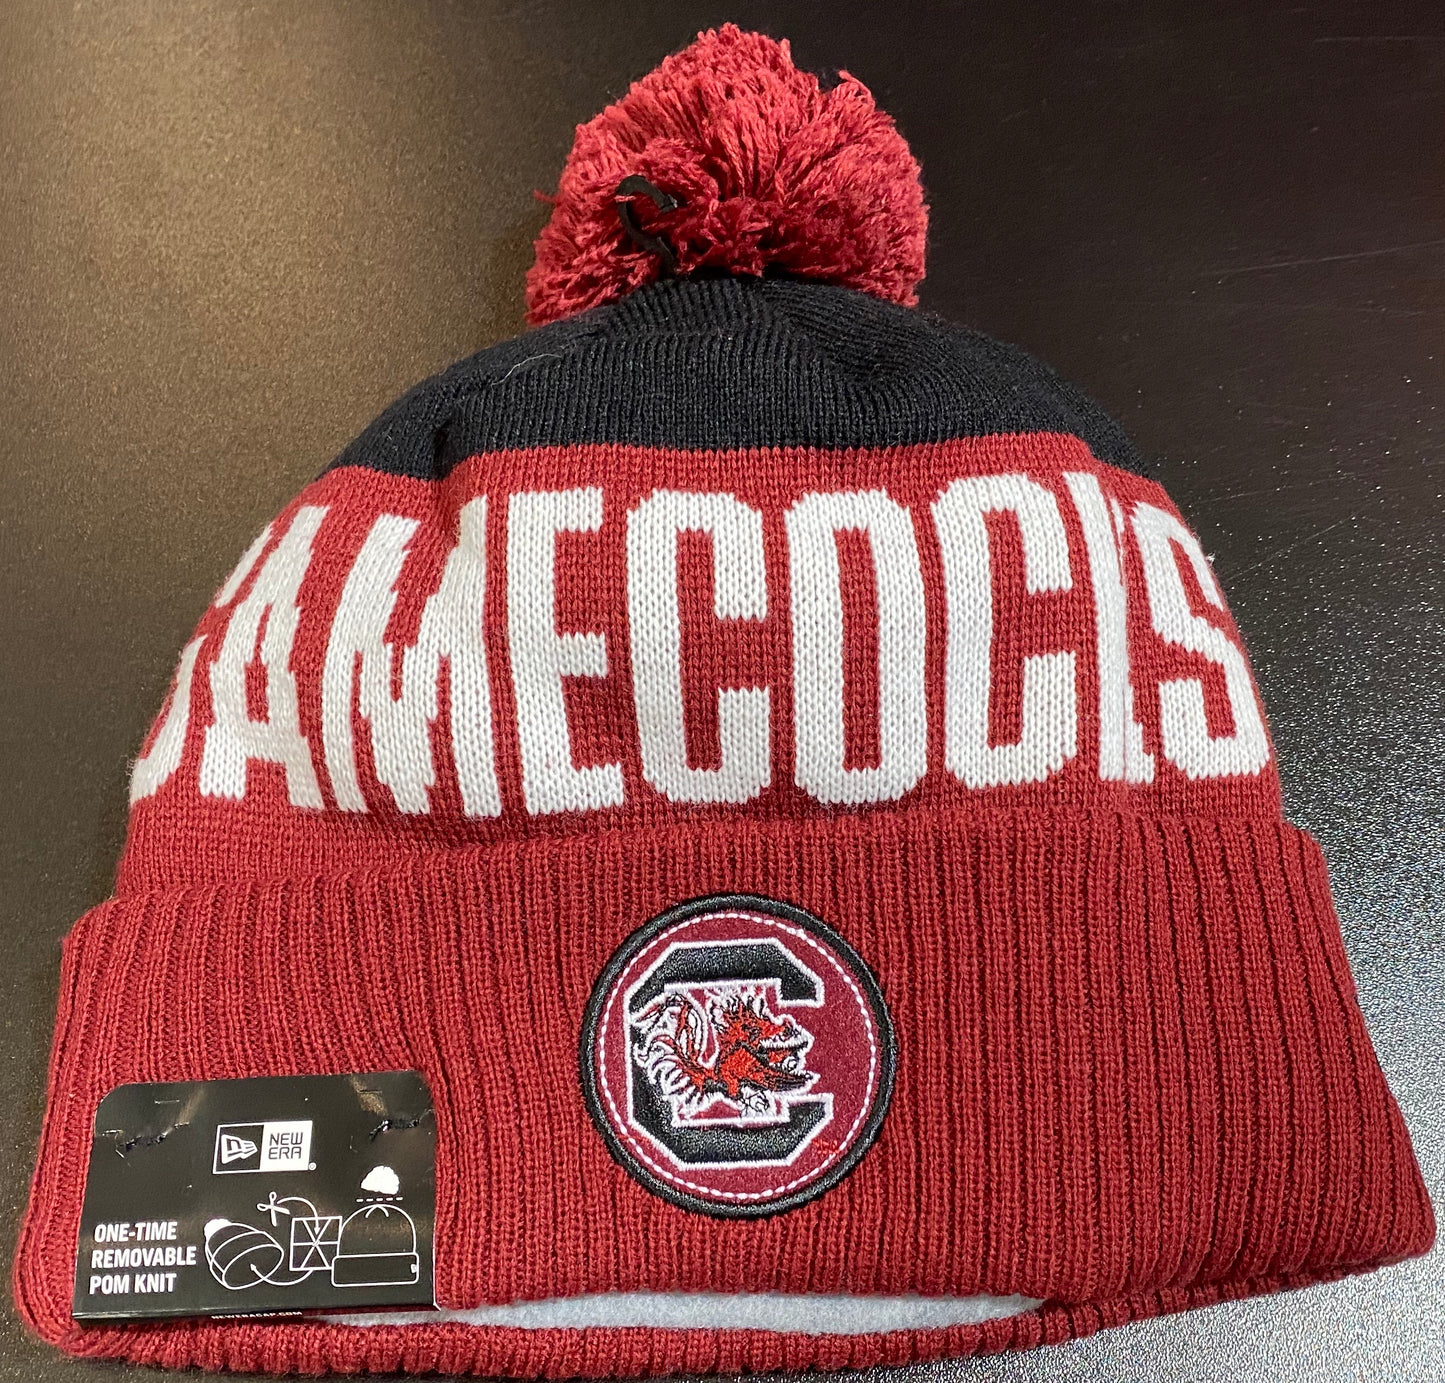 New Era South Carolina Gamecocks OTC Knit Hat with Pom